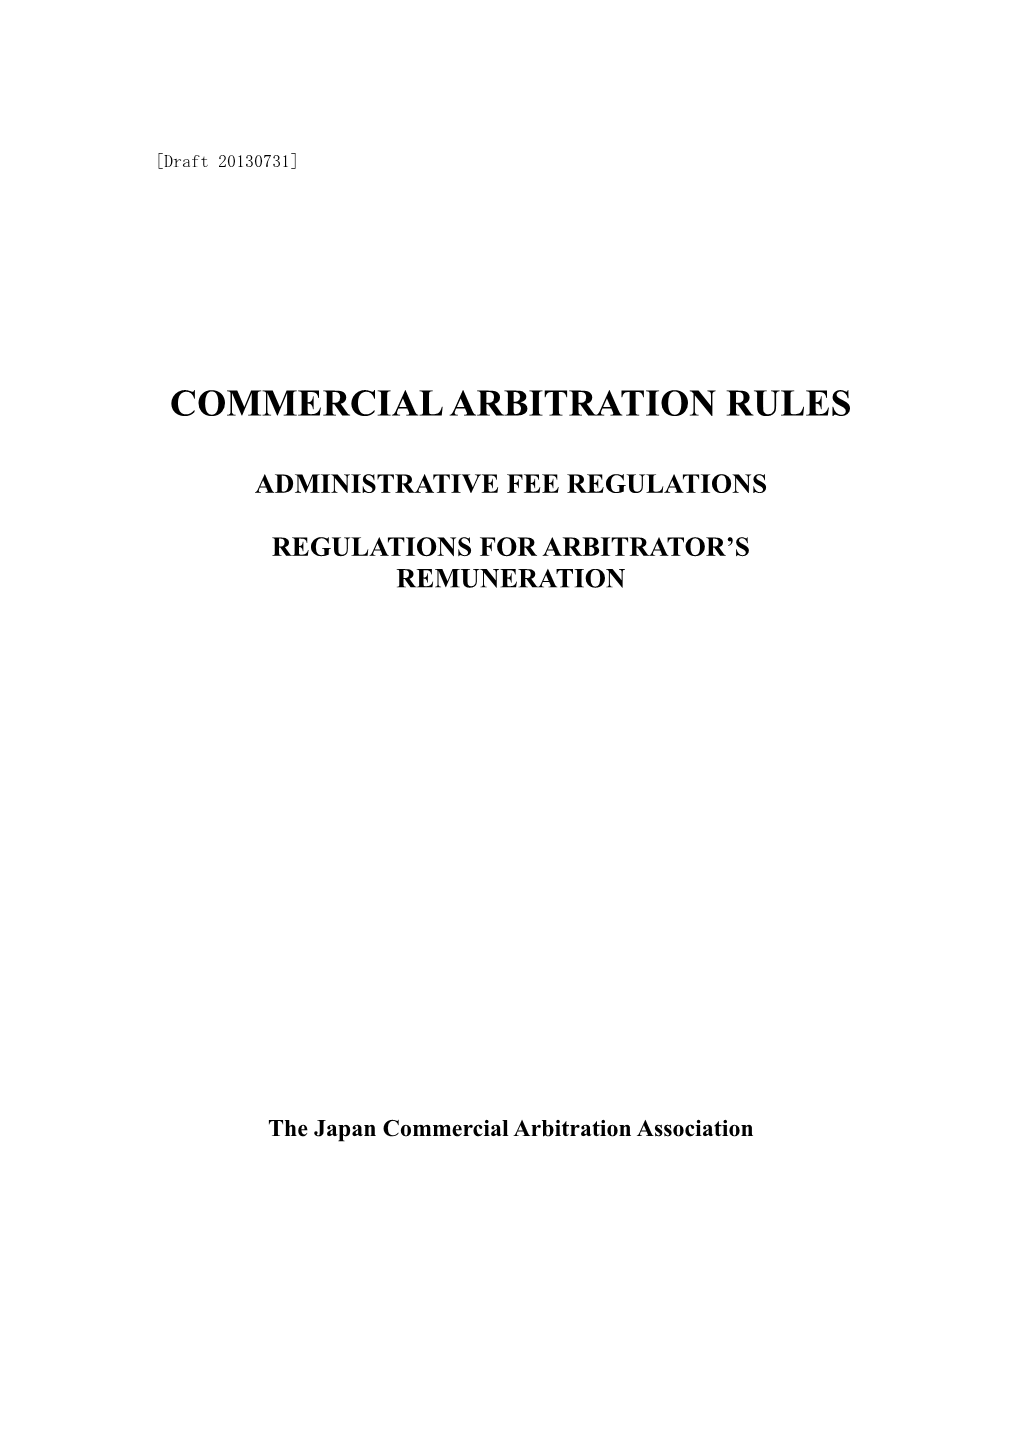 Regulations for Arbitrator S Remuneration